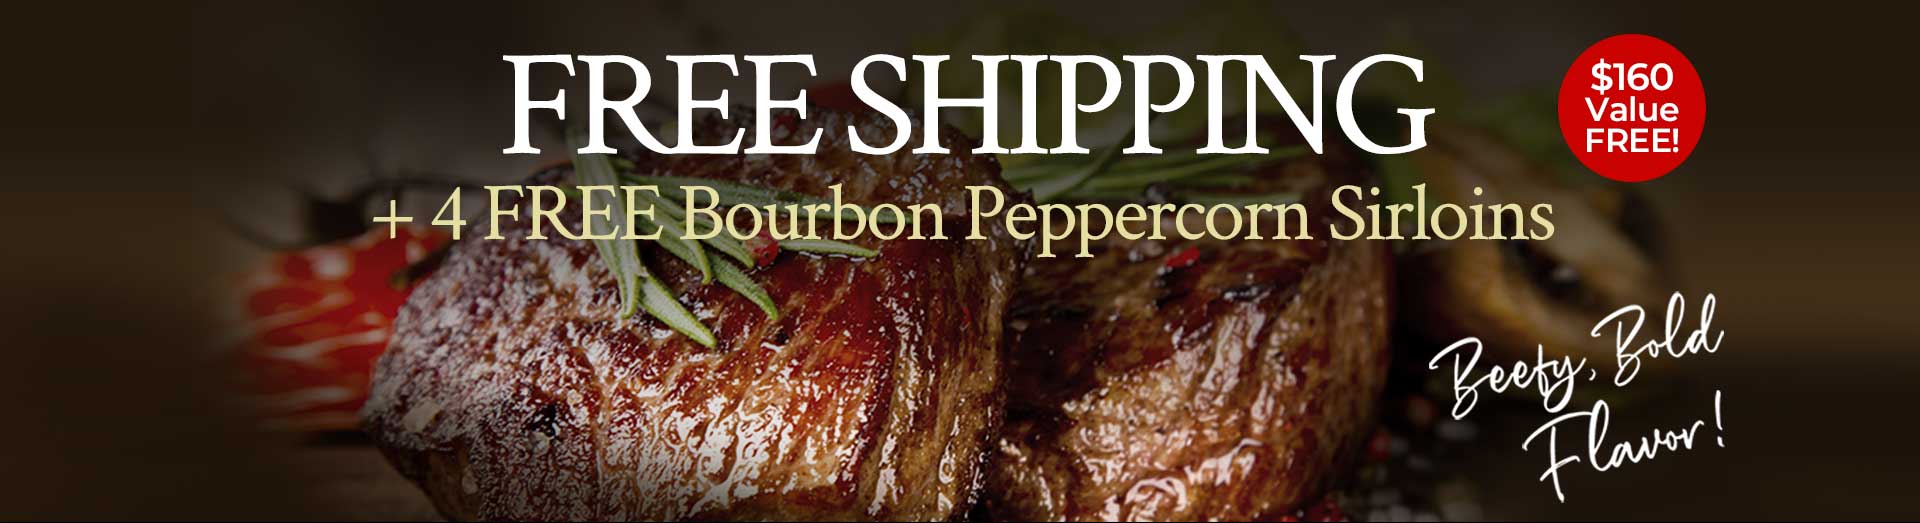 Free Shipping + 4 Free Bourbon Peppercorn Sirloins | $160 Value Free